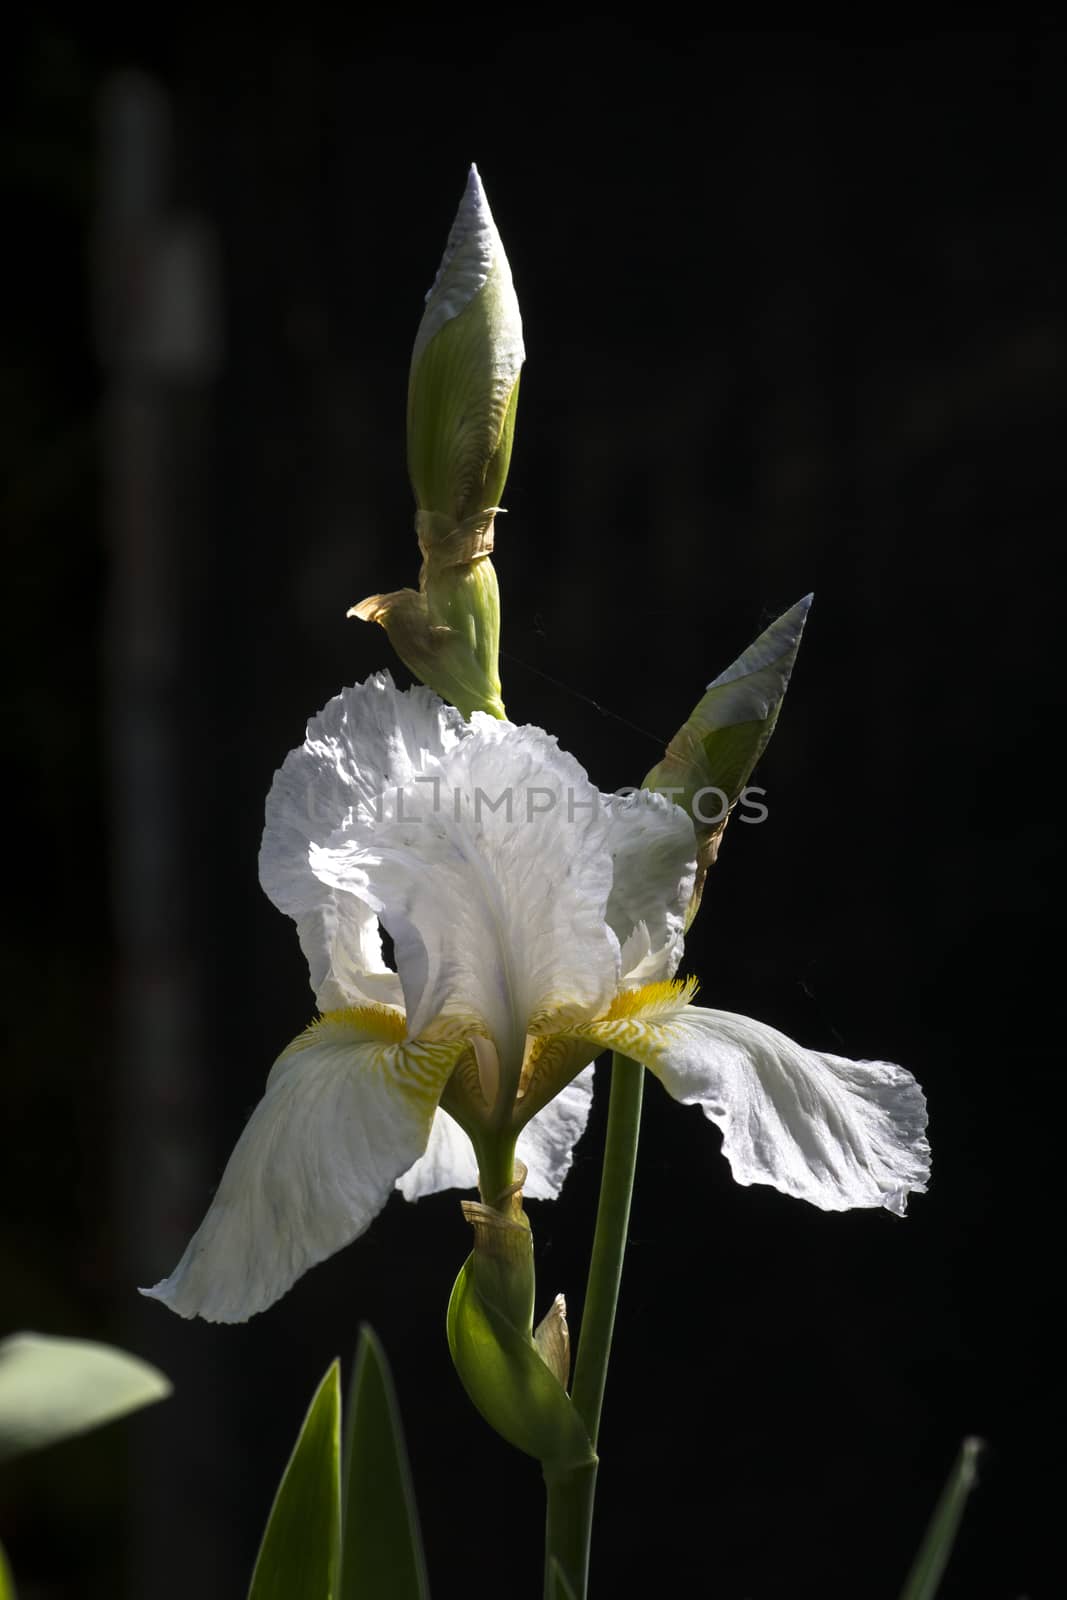 The spring garden ornament in the iris flower.